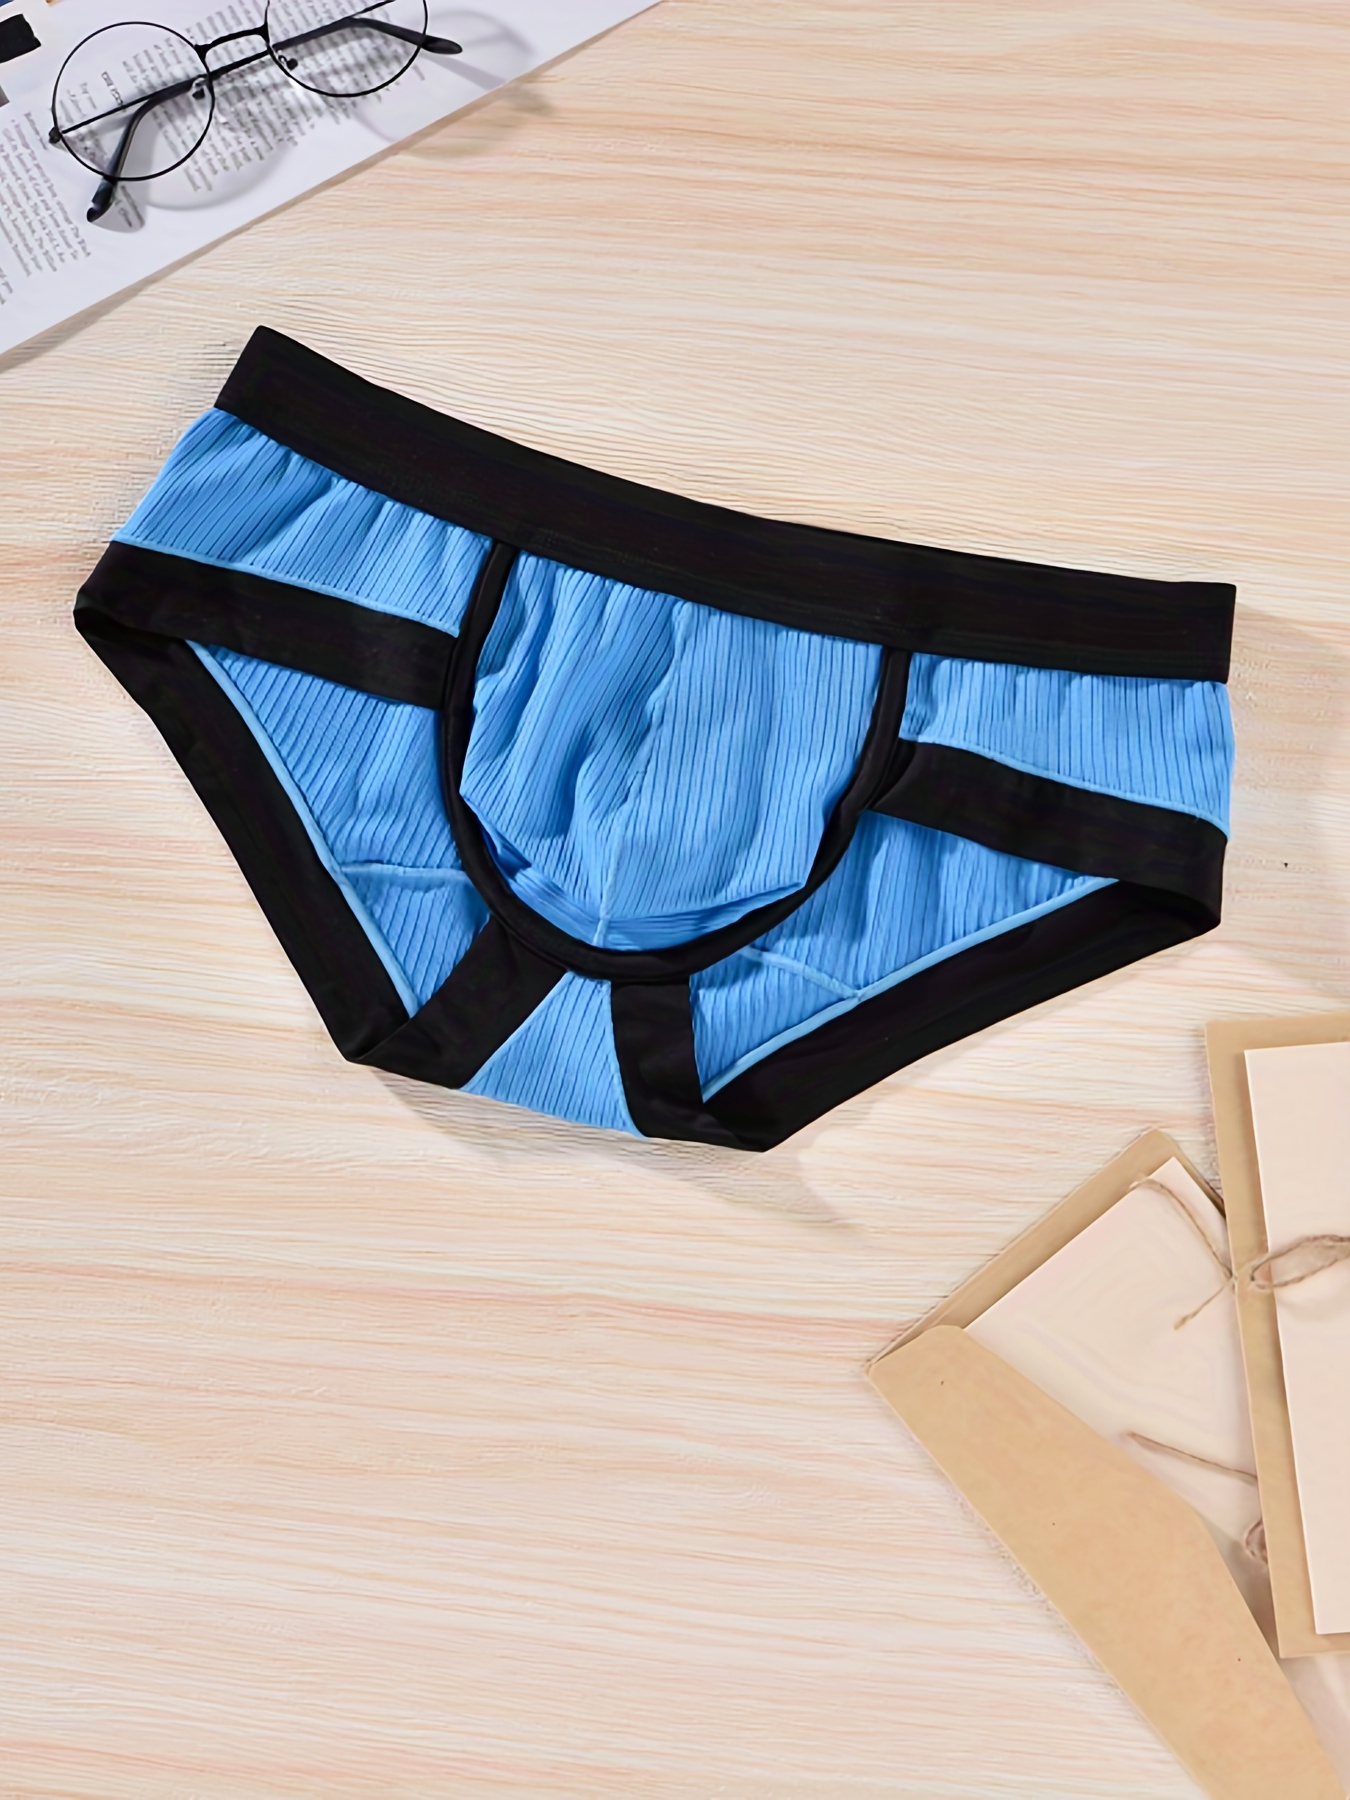 Men's Sexy Underwear - Lounge Boxer Shorts – Oh My!